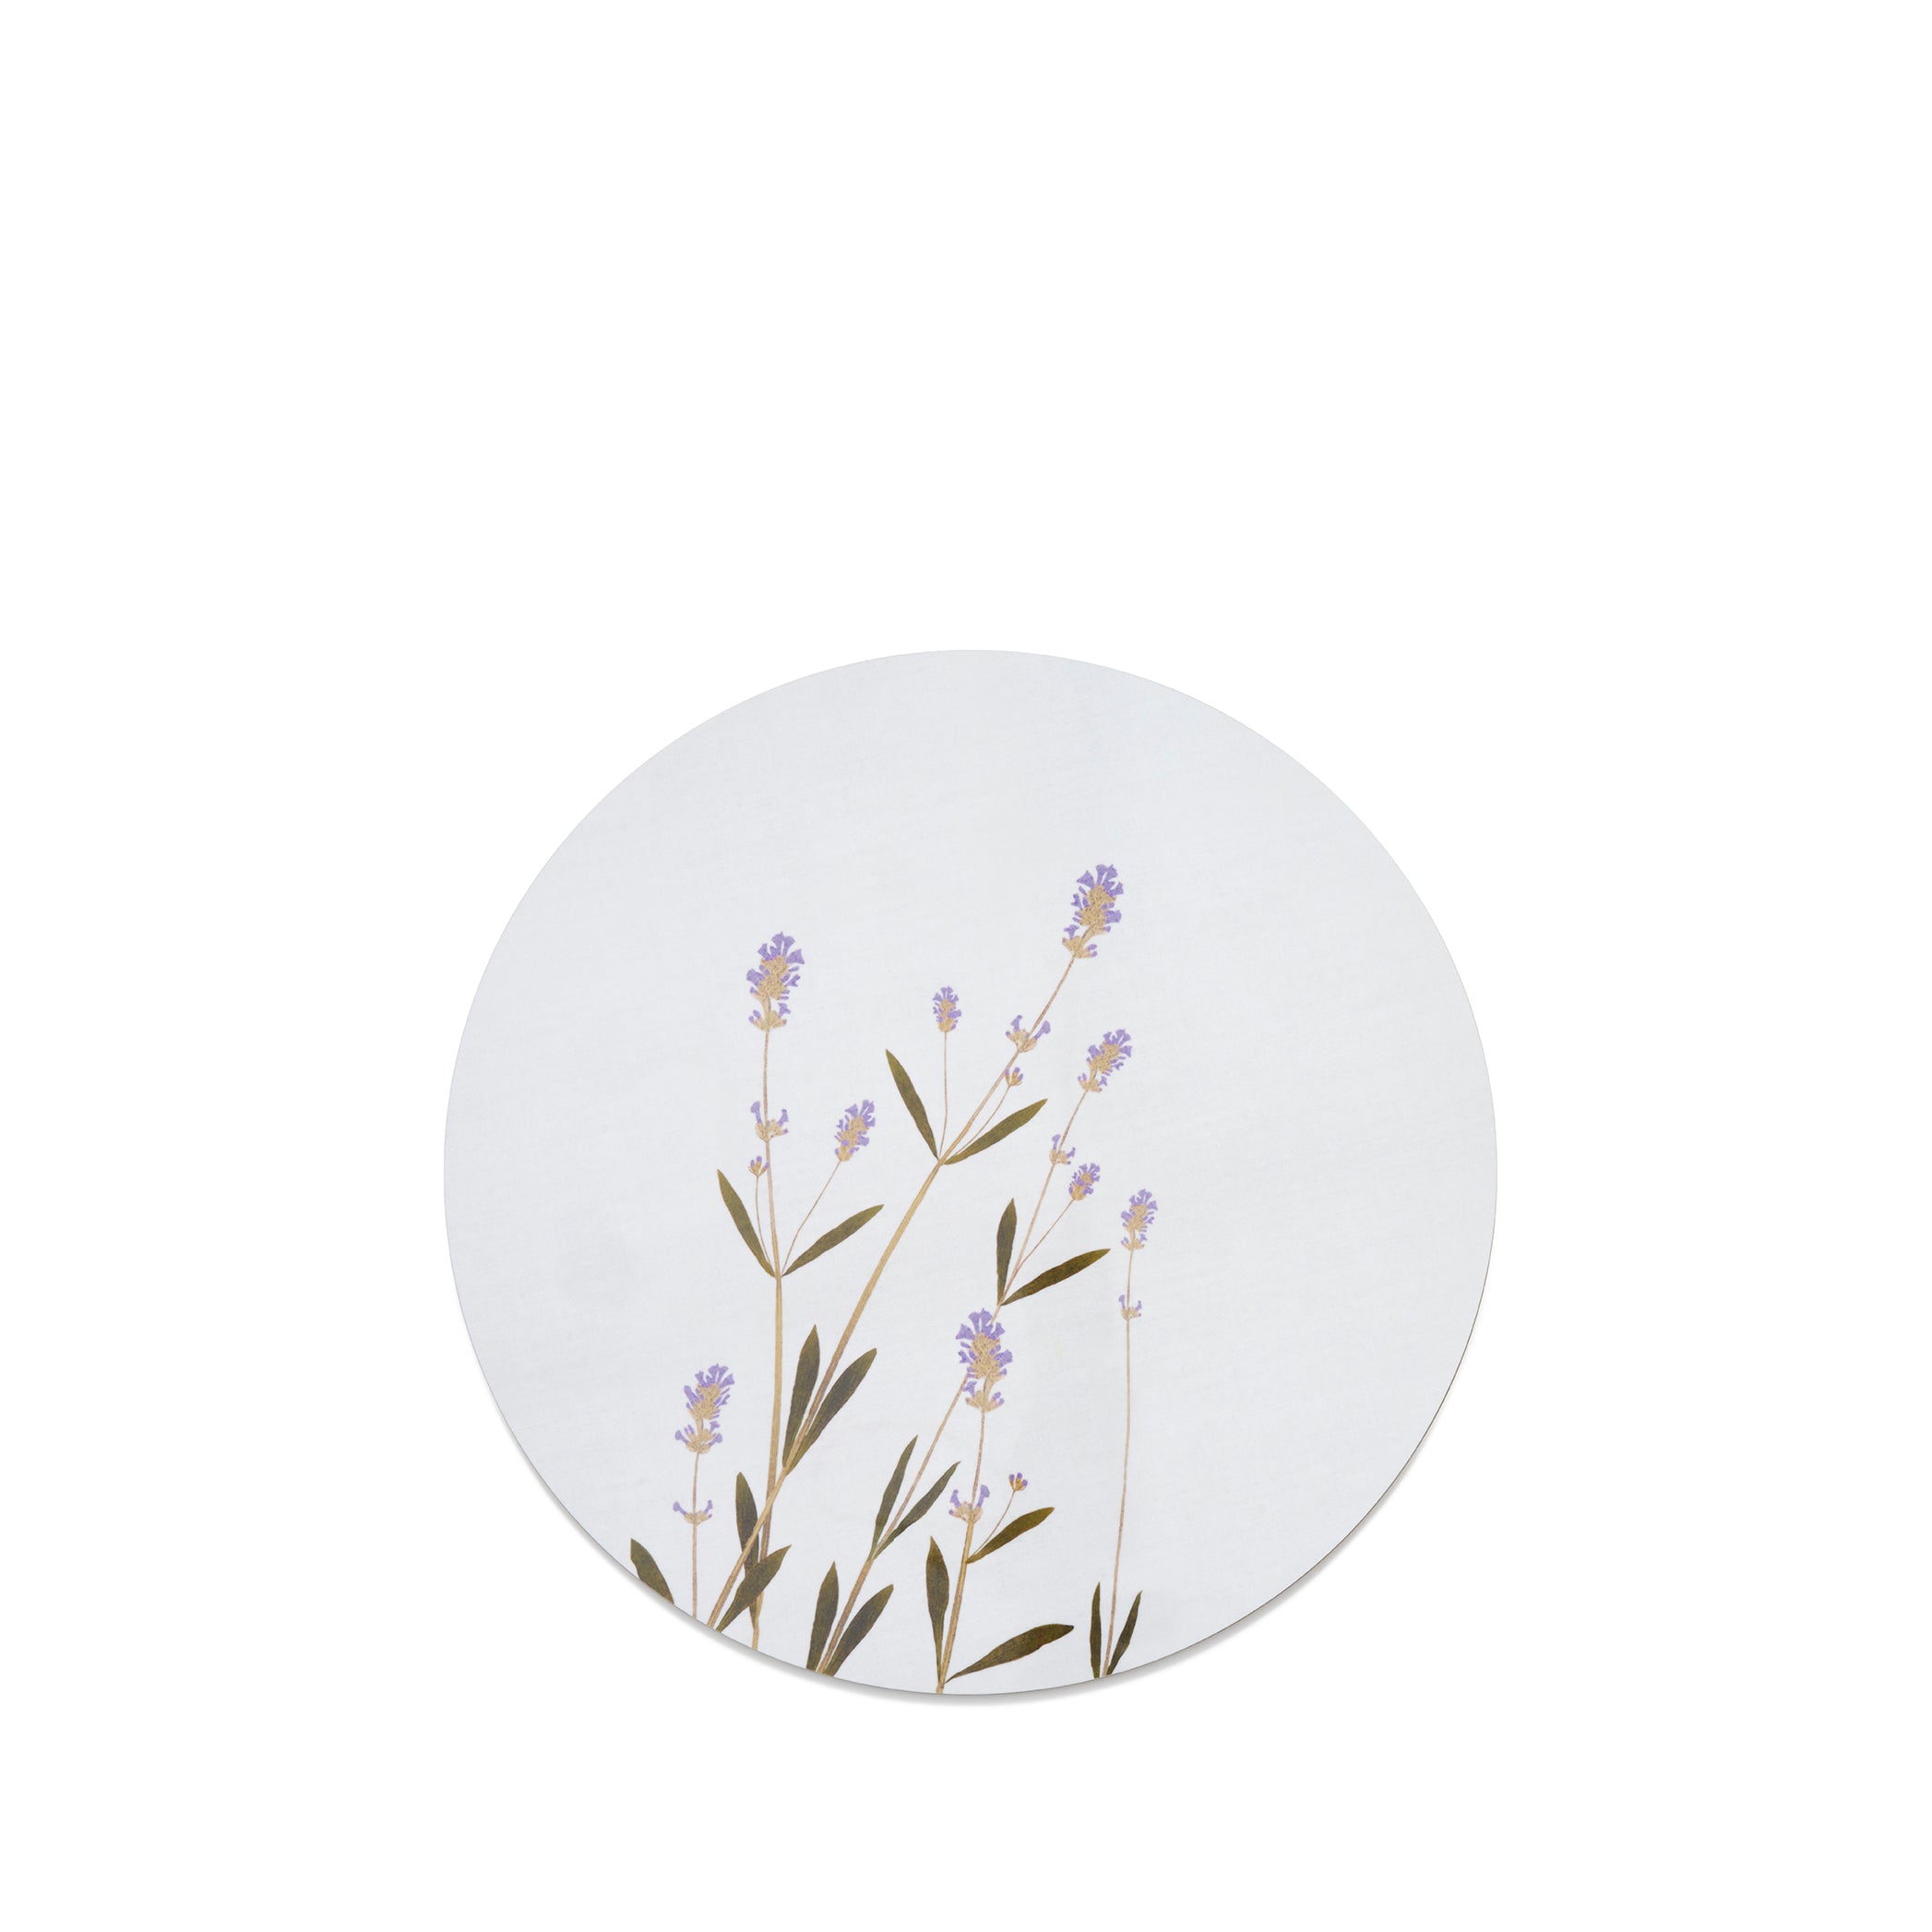 Herbarium Round Cork-backed Placemat in Lavender